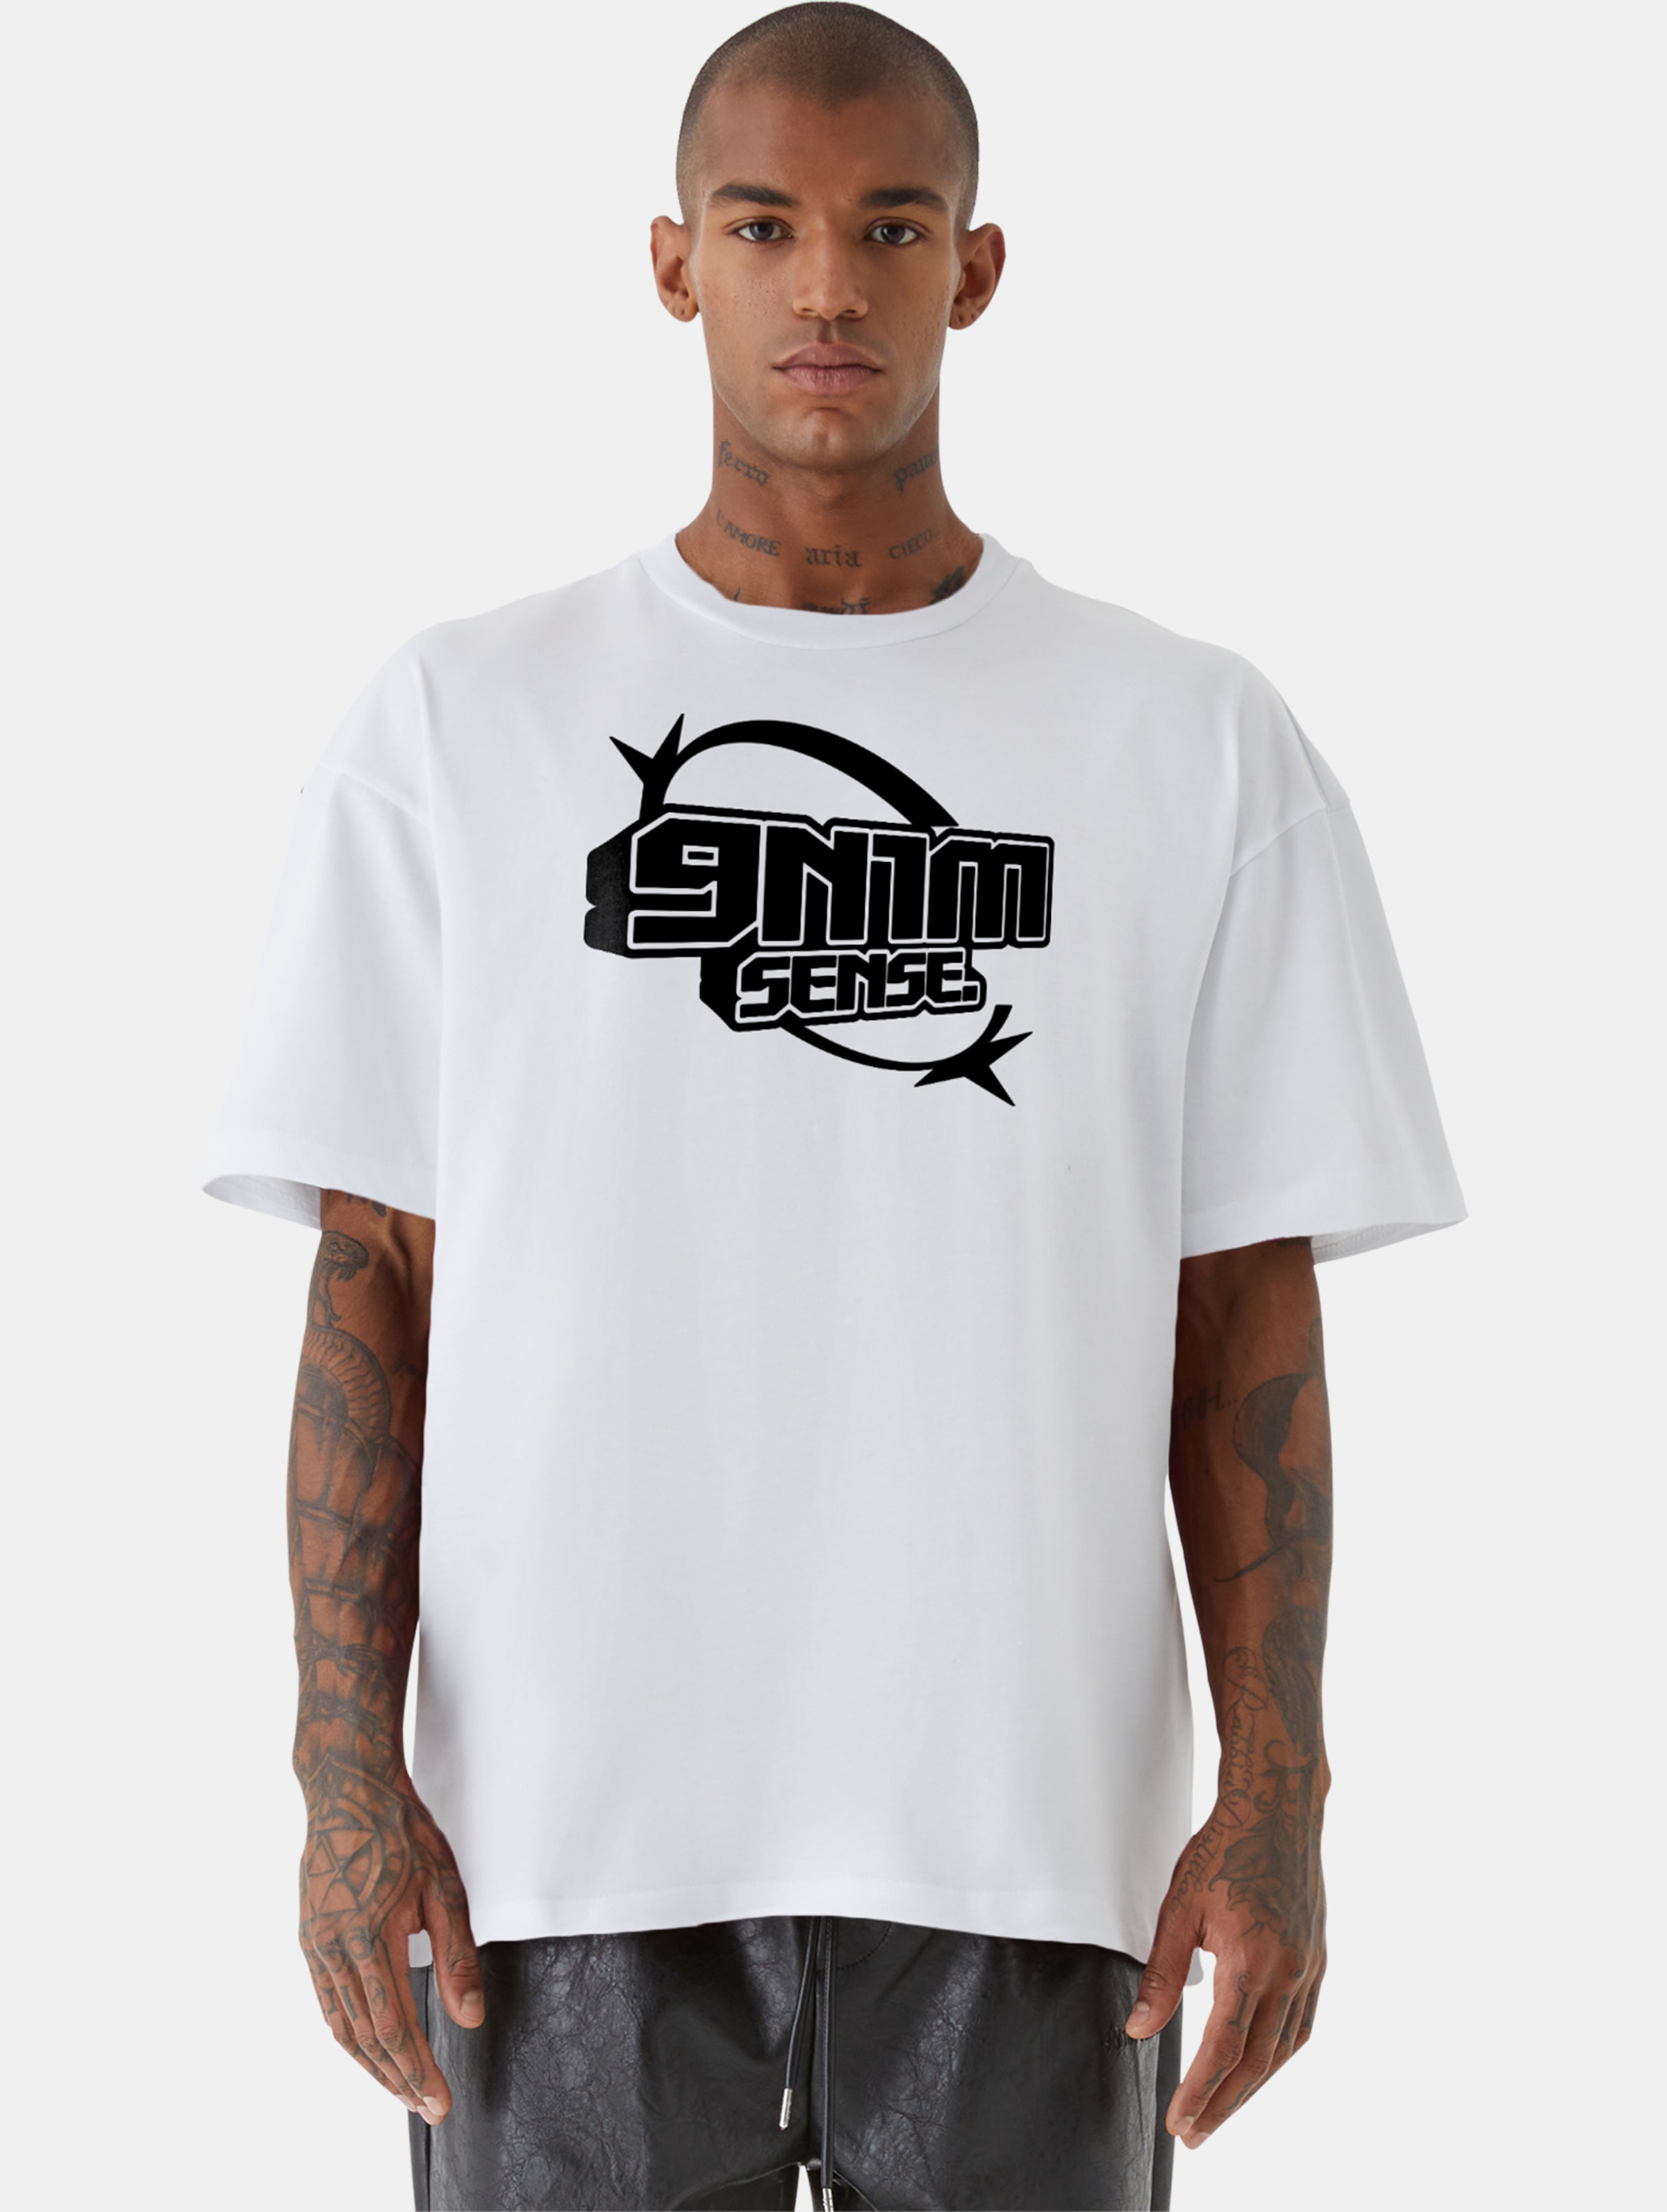 9N1M SENSE Y2K T-Shirt Männer,Unisex op kleur wit, Maat XL